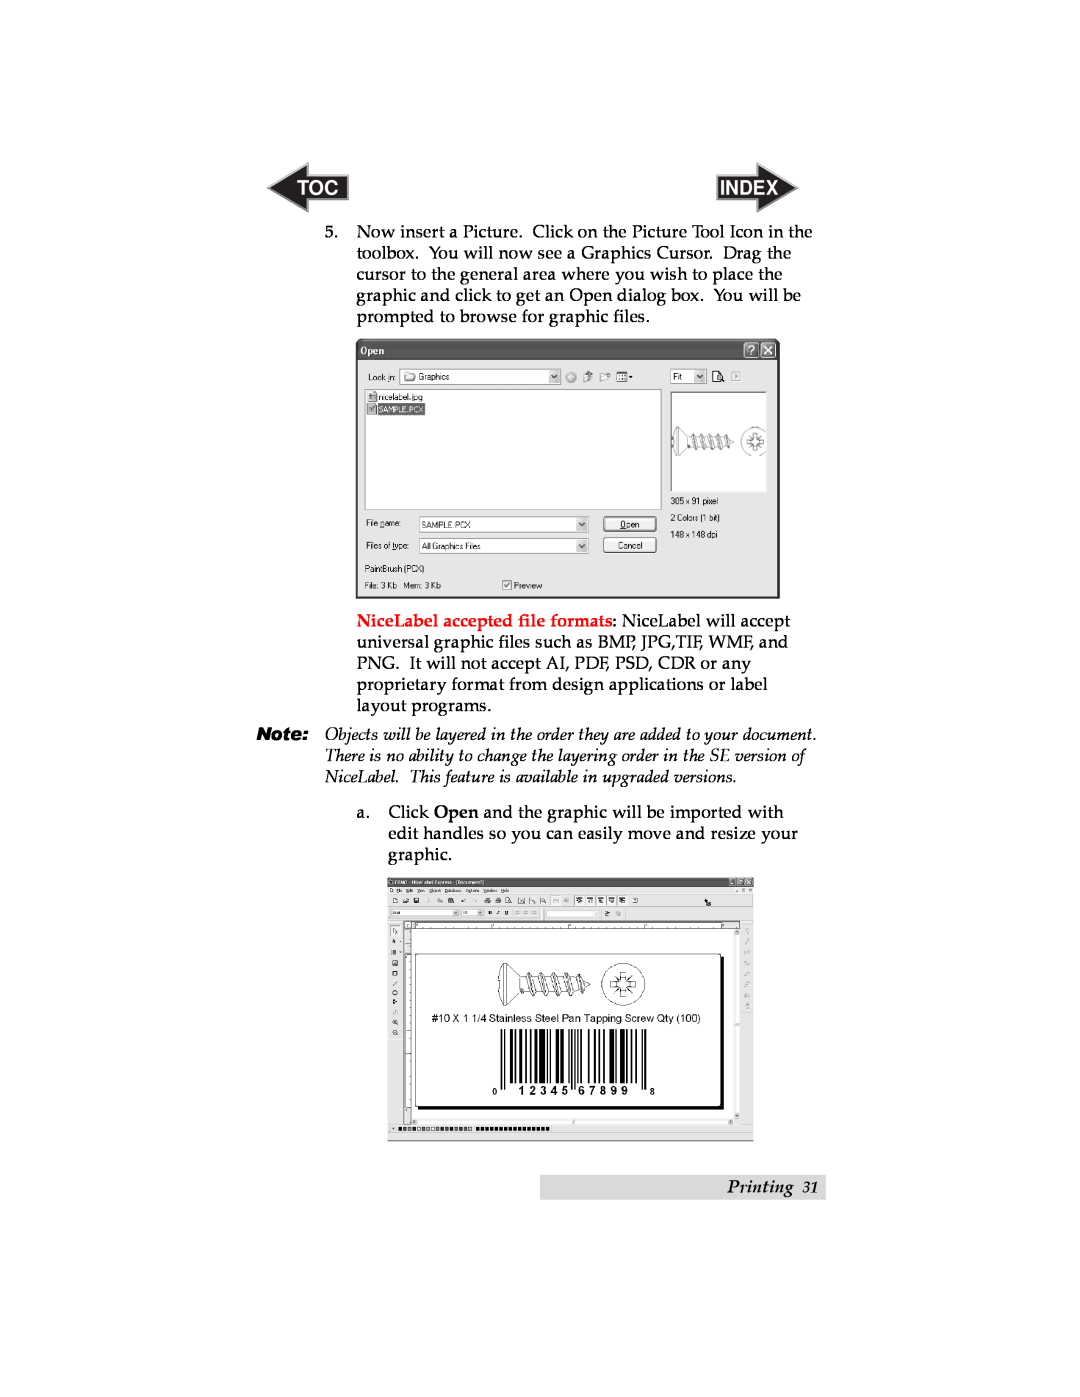 Primera Technology RX900 user manual Index, Printing 